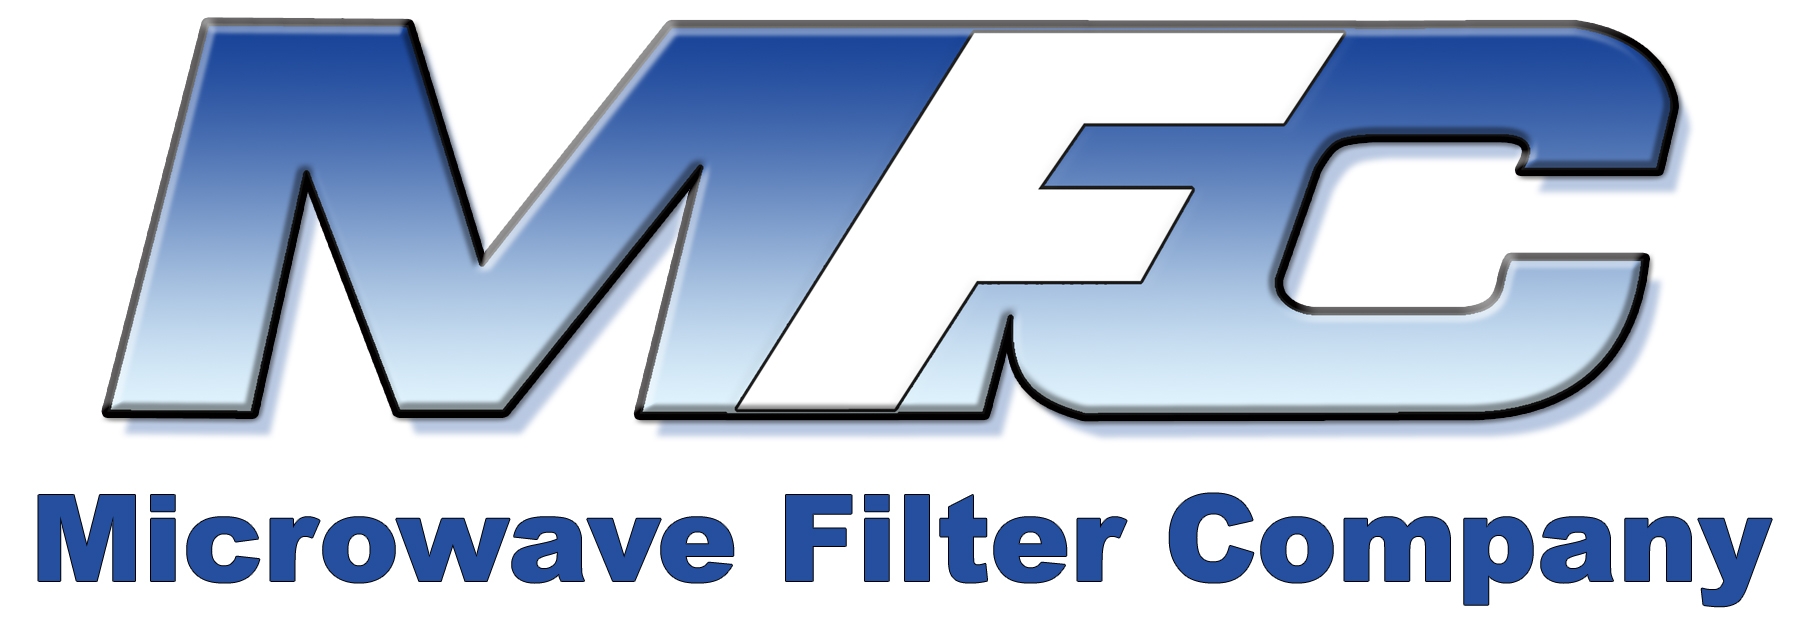 Microwave Filter Company - satellite uplink downlink